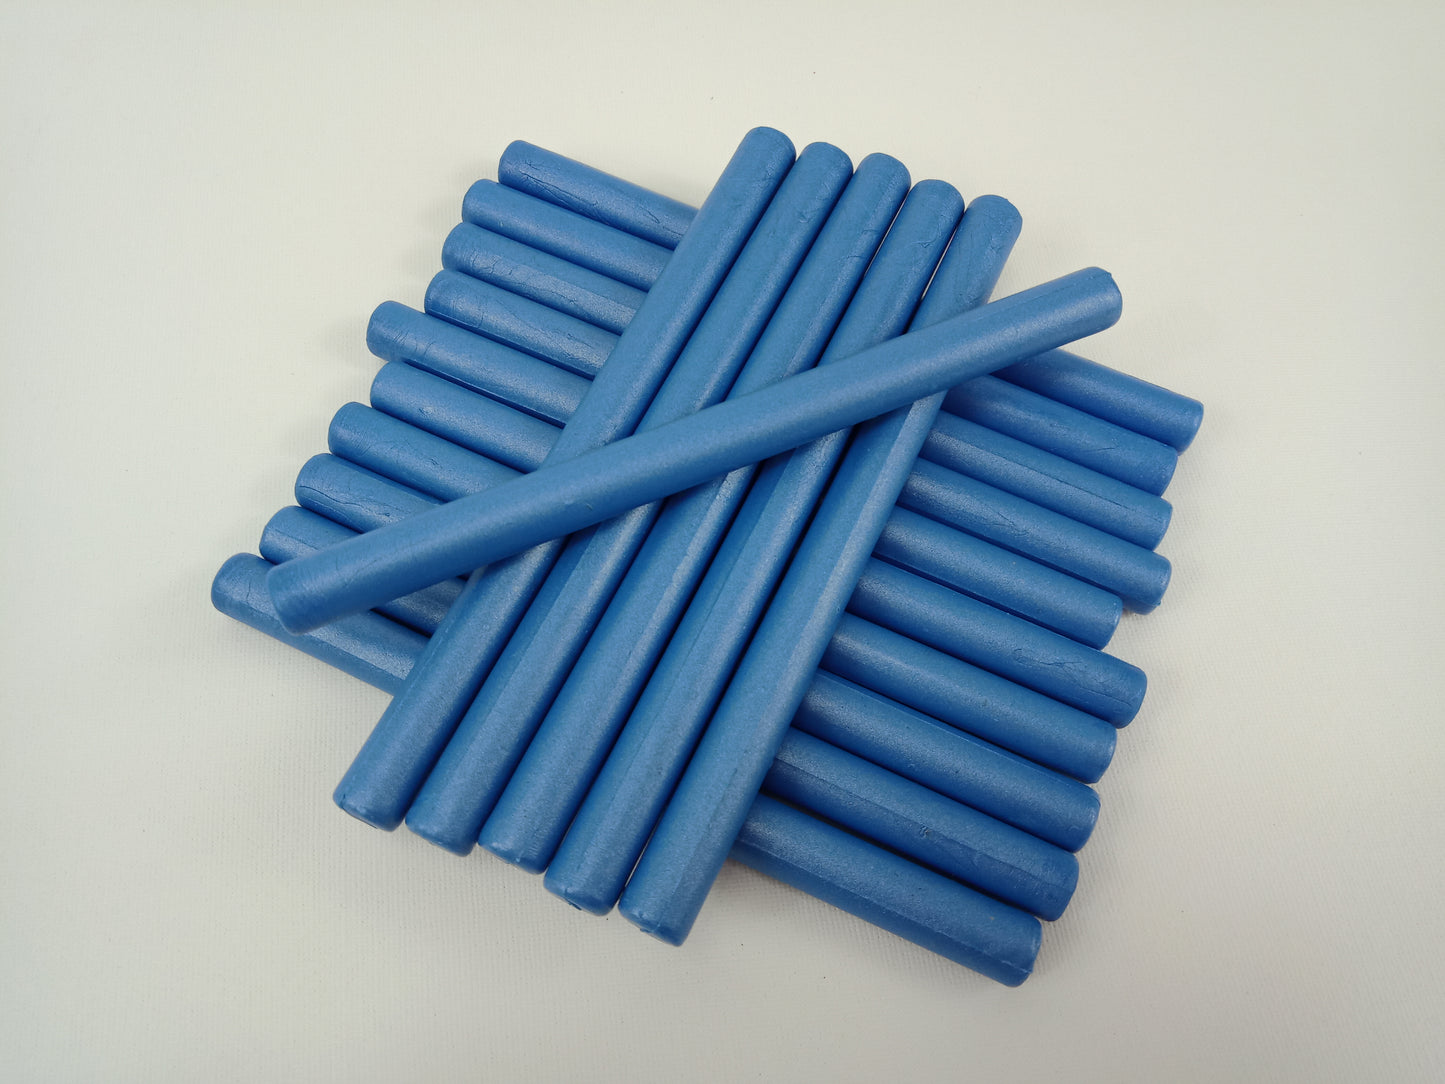 7mm Sealing wax stick for use in Hot glue guns- Metallic Blue